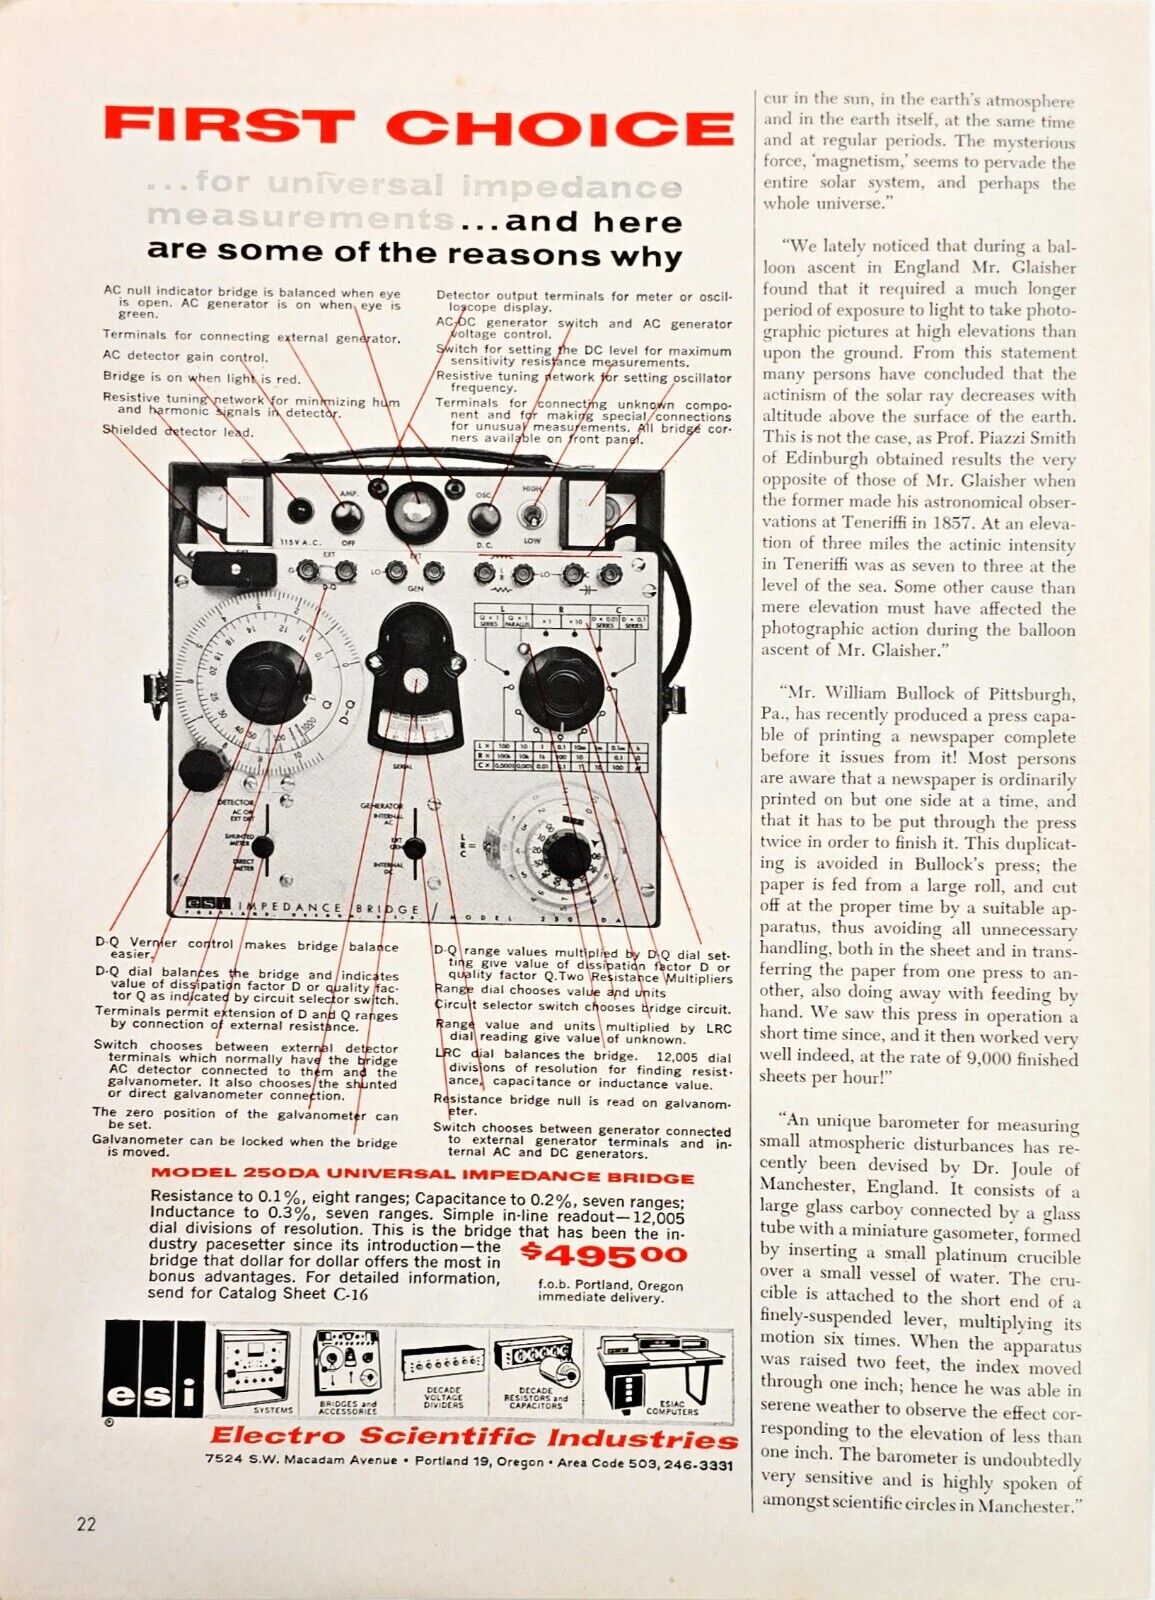 Electro Scientific Industries Univ Impedance Bridge 2/3 Page 1963 Print Ad 8x11